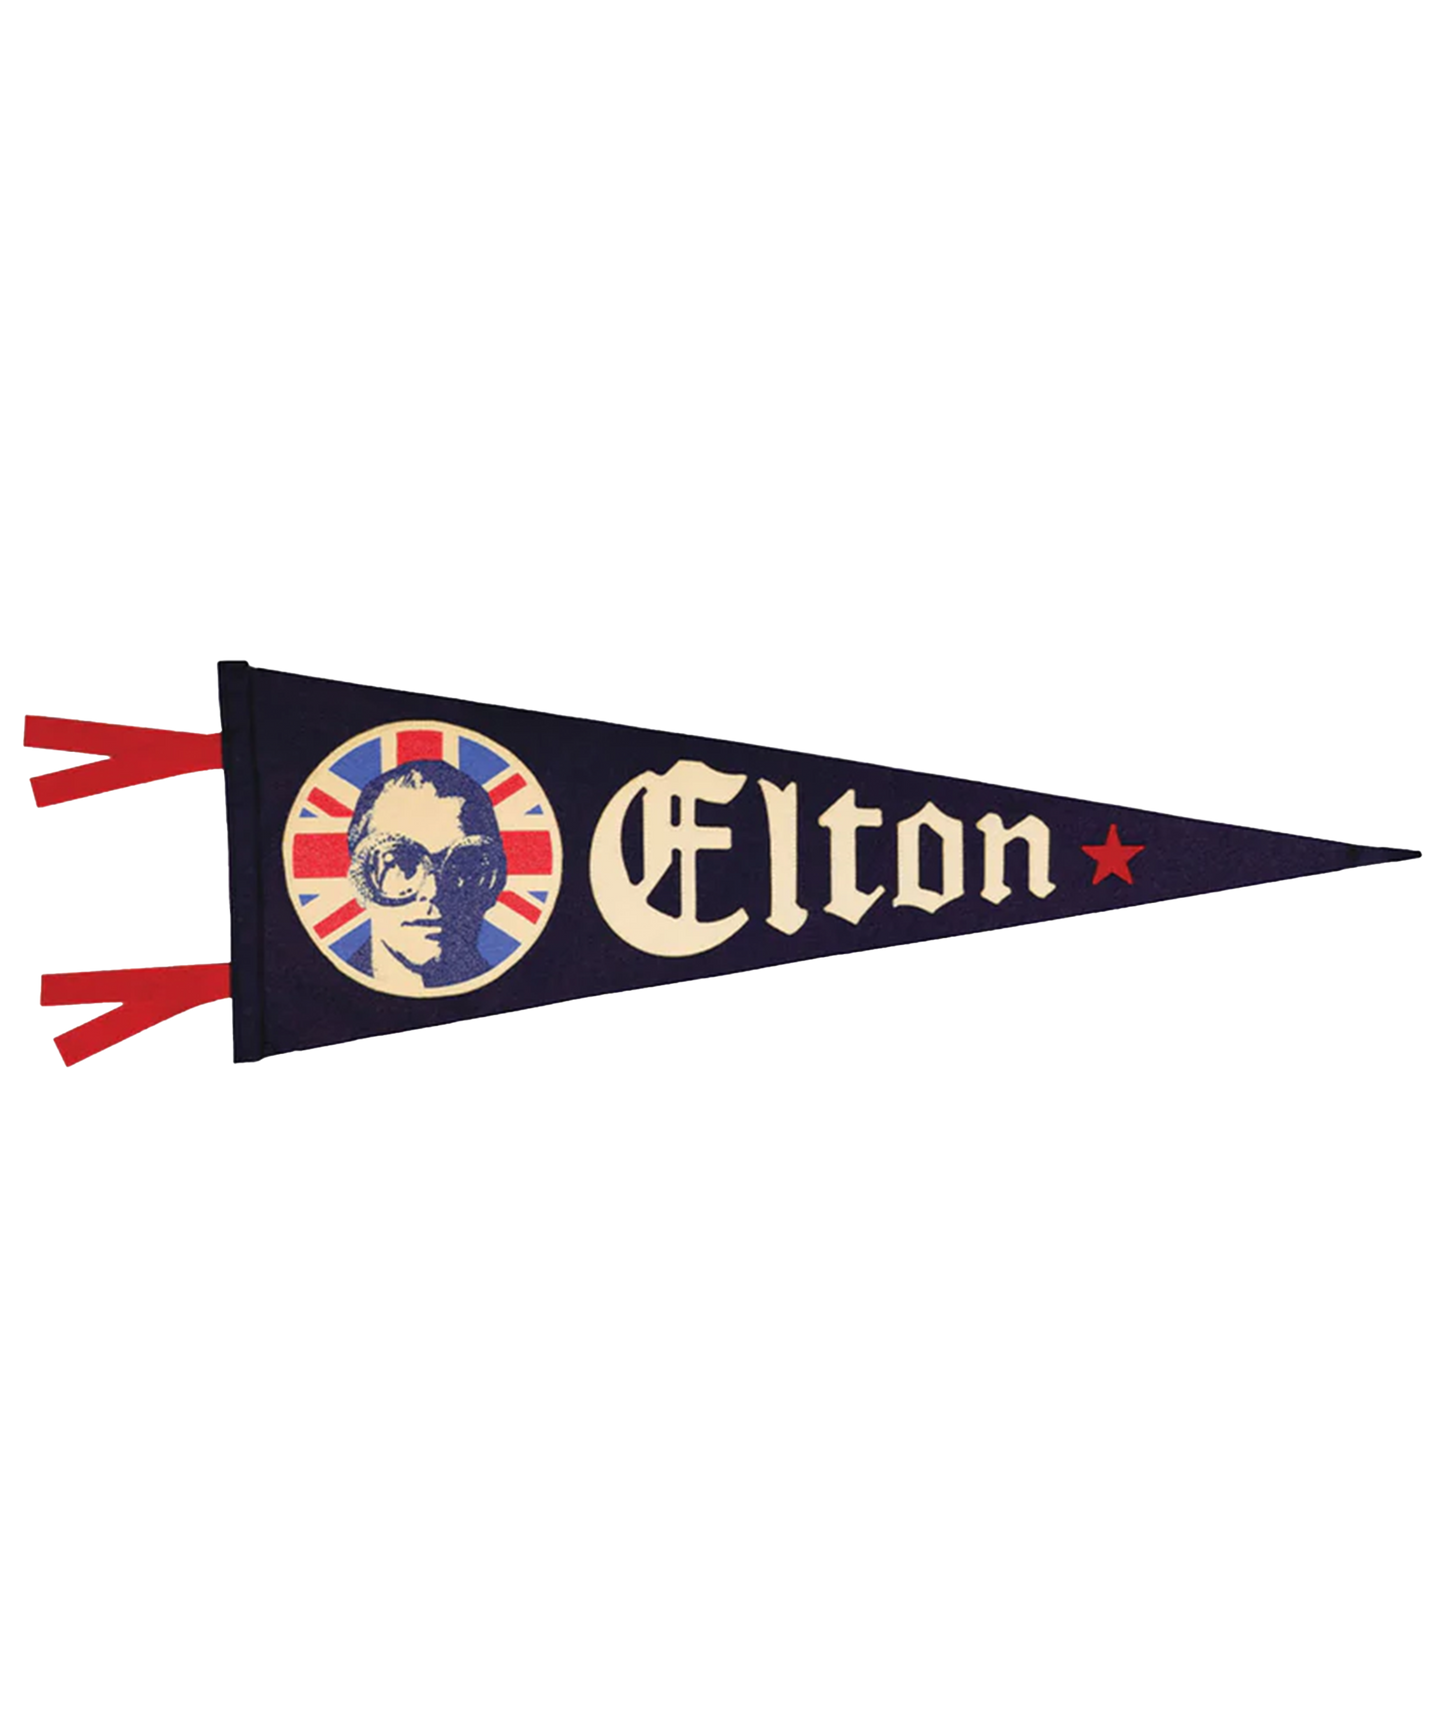 Stitched Union Jack Elton Pennant • Elton John x Oxford Pennant